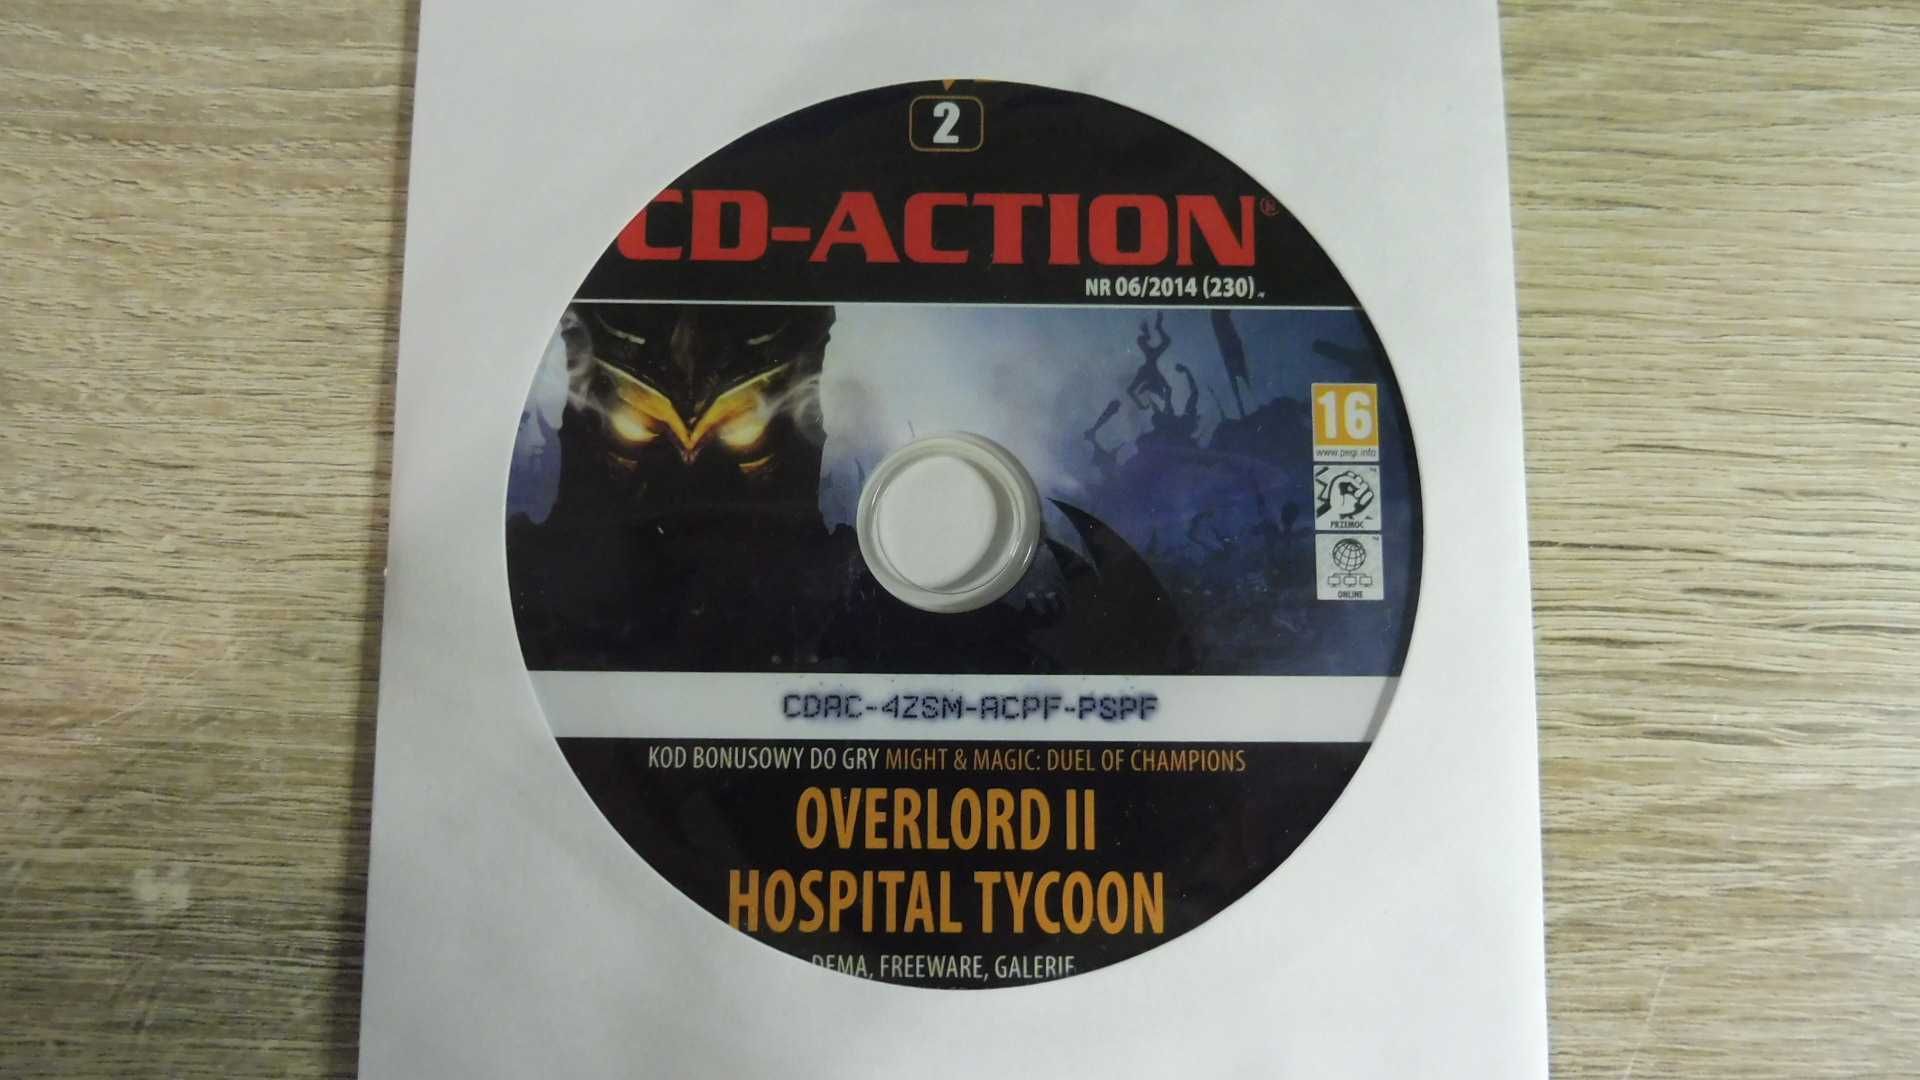 CD Action 06/2014 (230) - DVD 2 - Overlord II, Hospital Tycoon